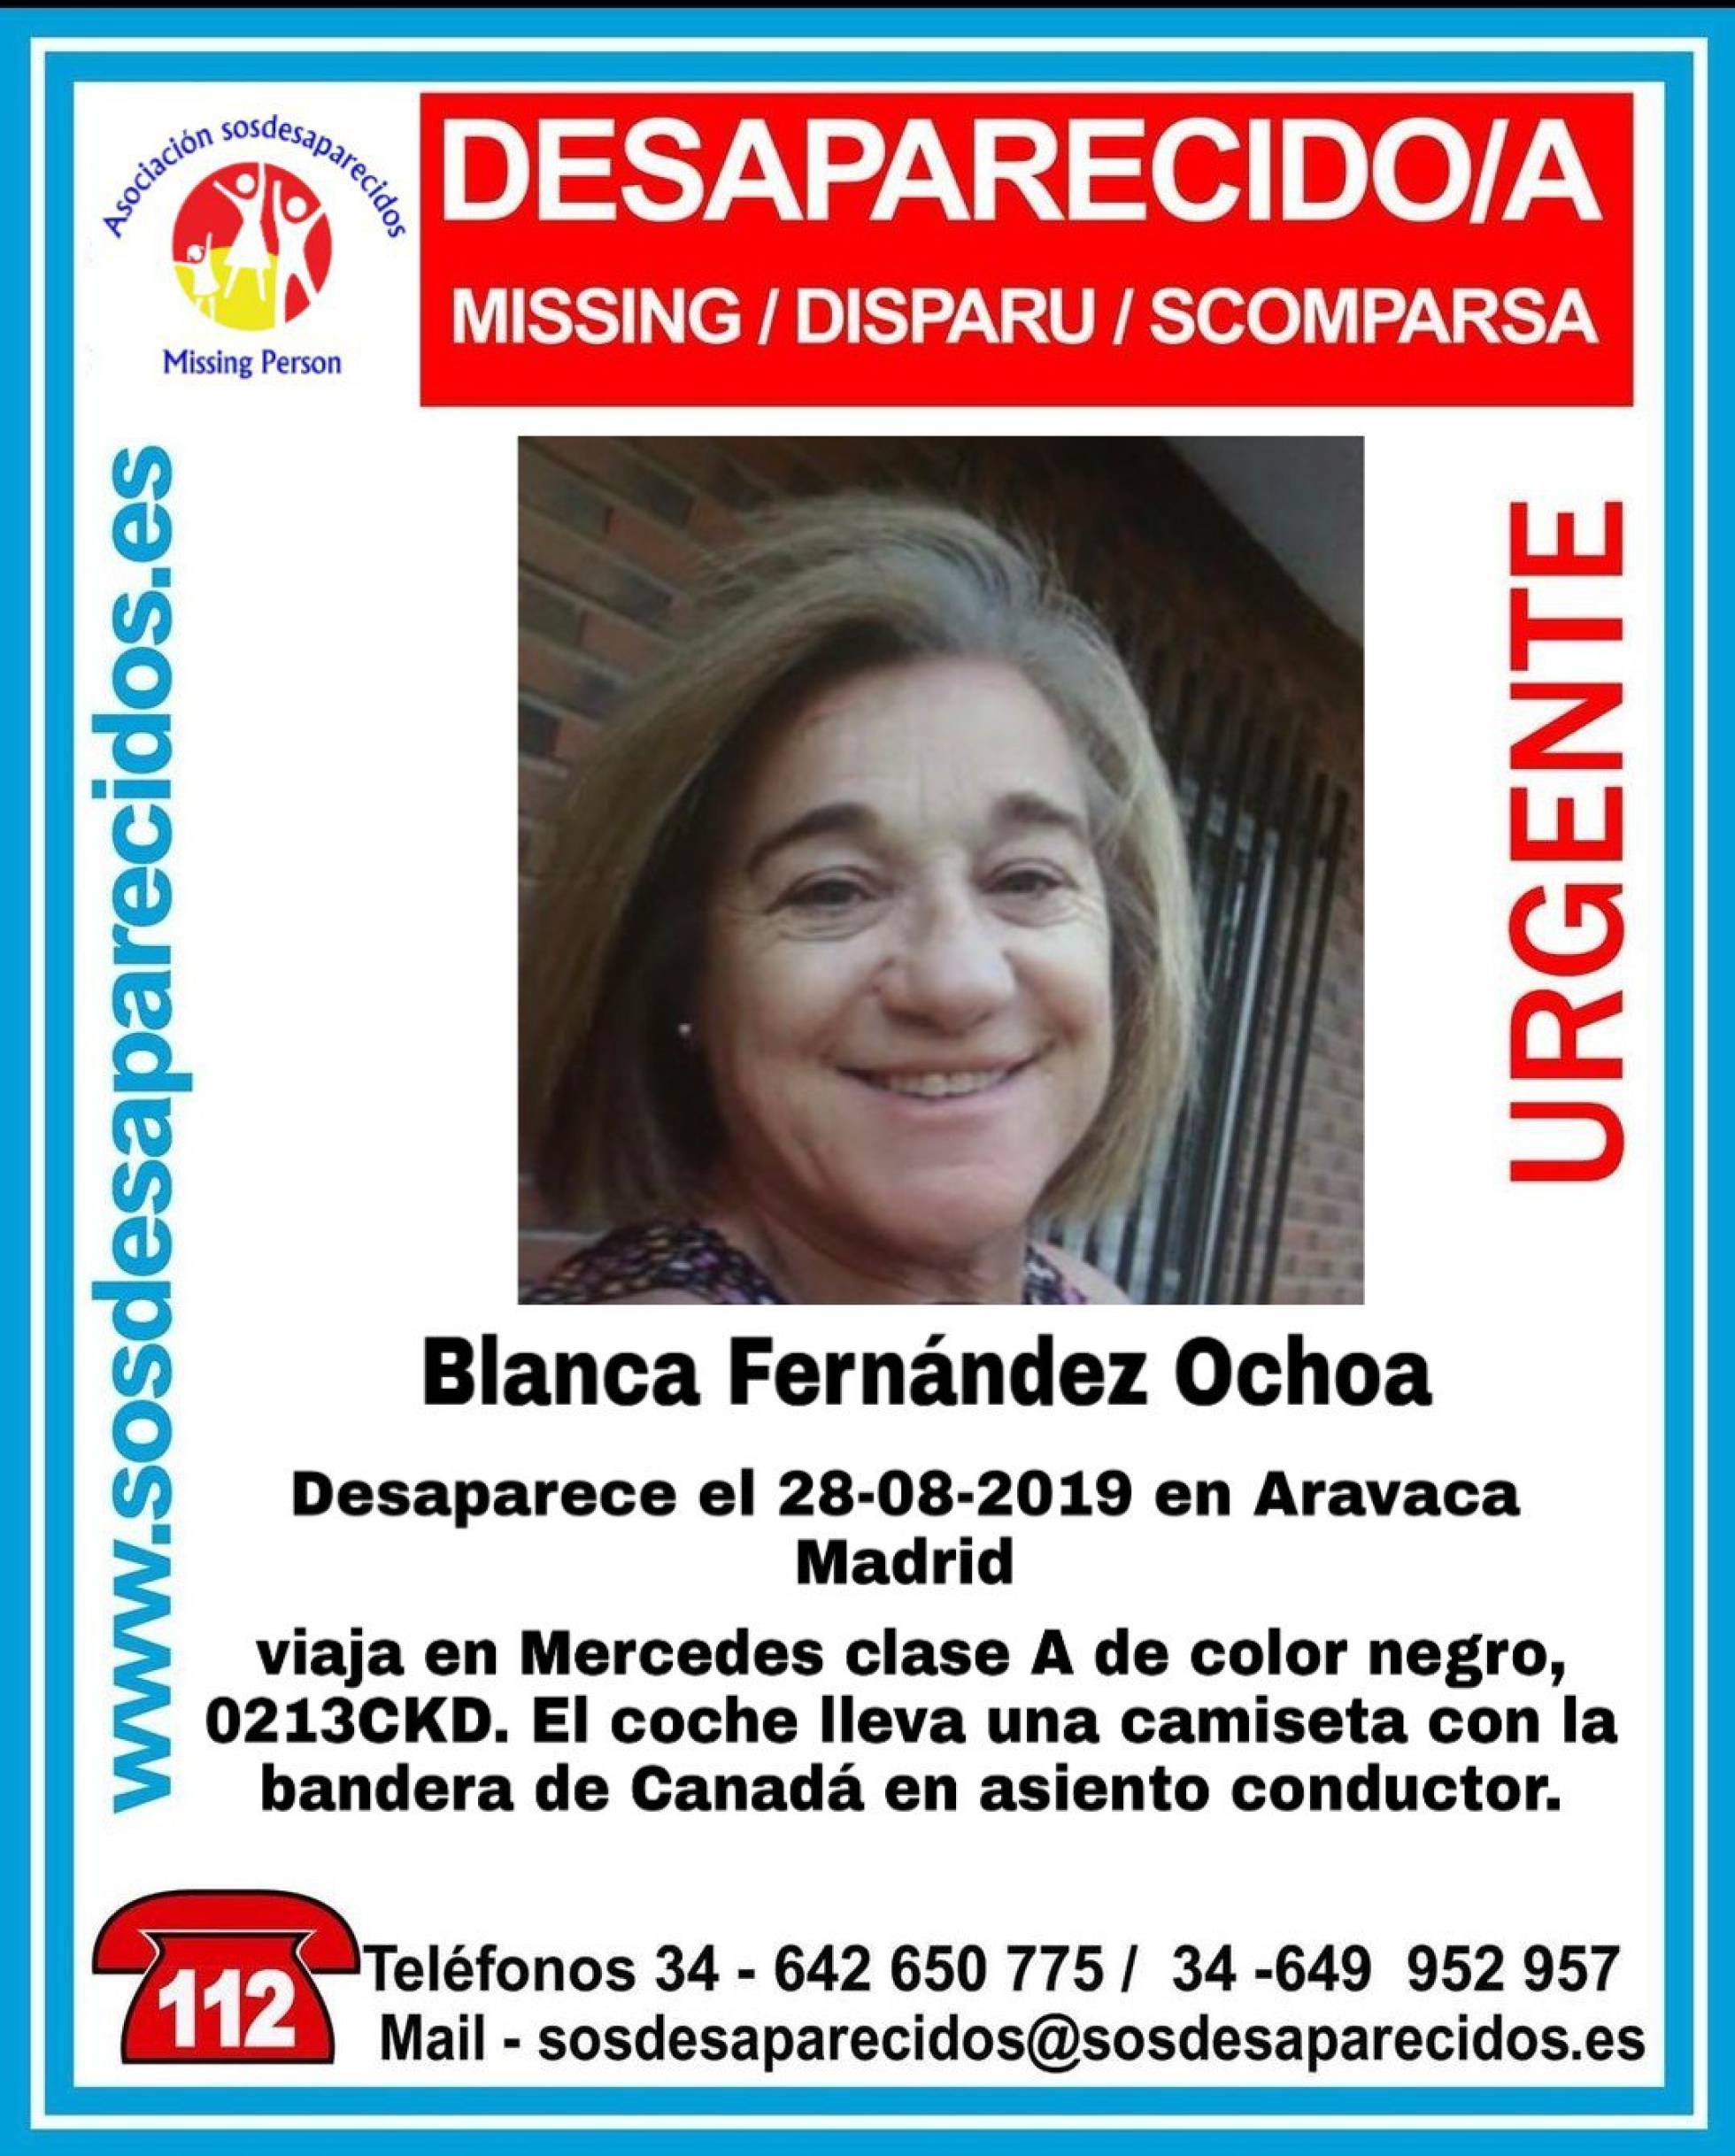 Blanca Fernandez Ochoa desaparecida